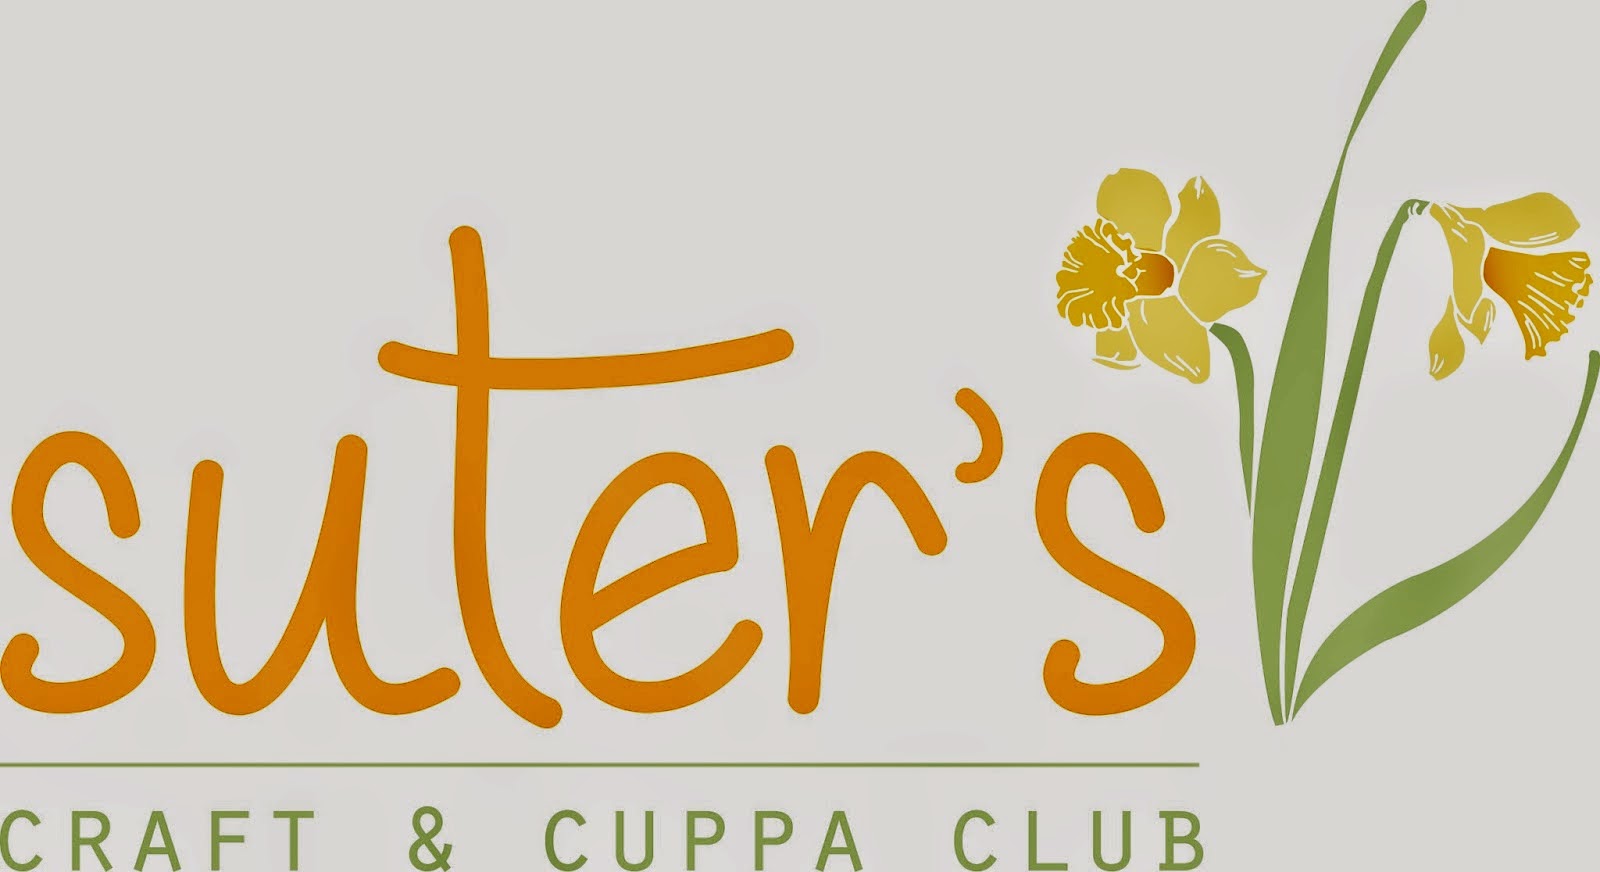 Suter's Craft & Cuppa Club